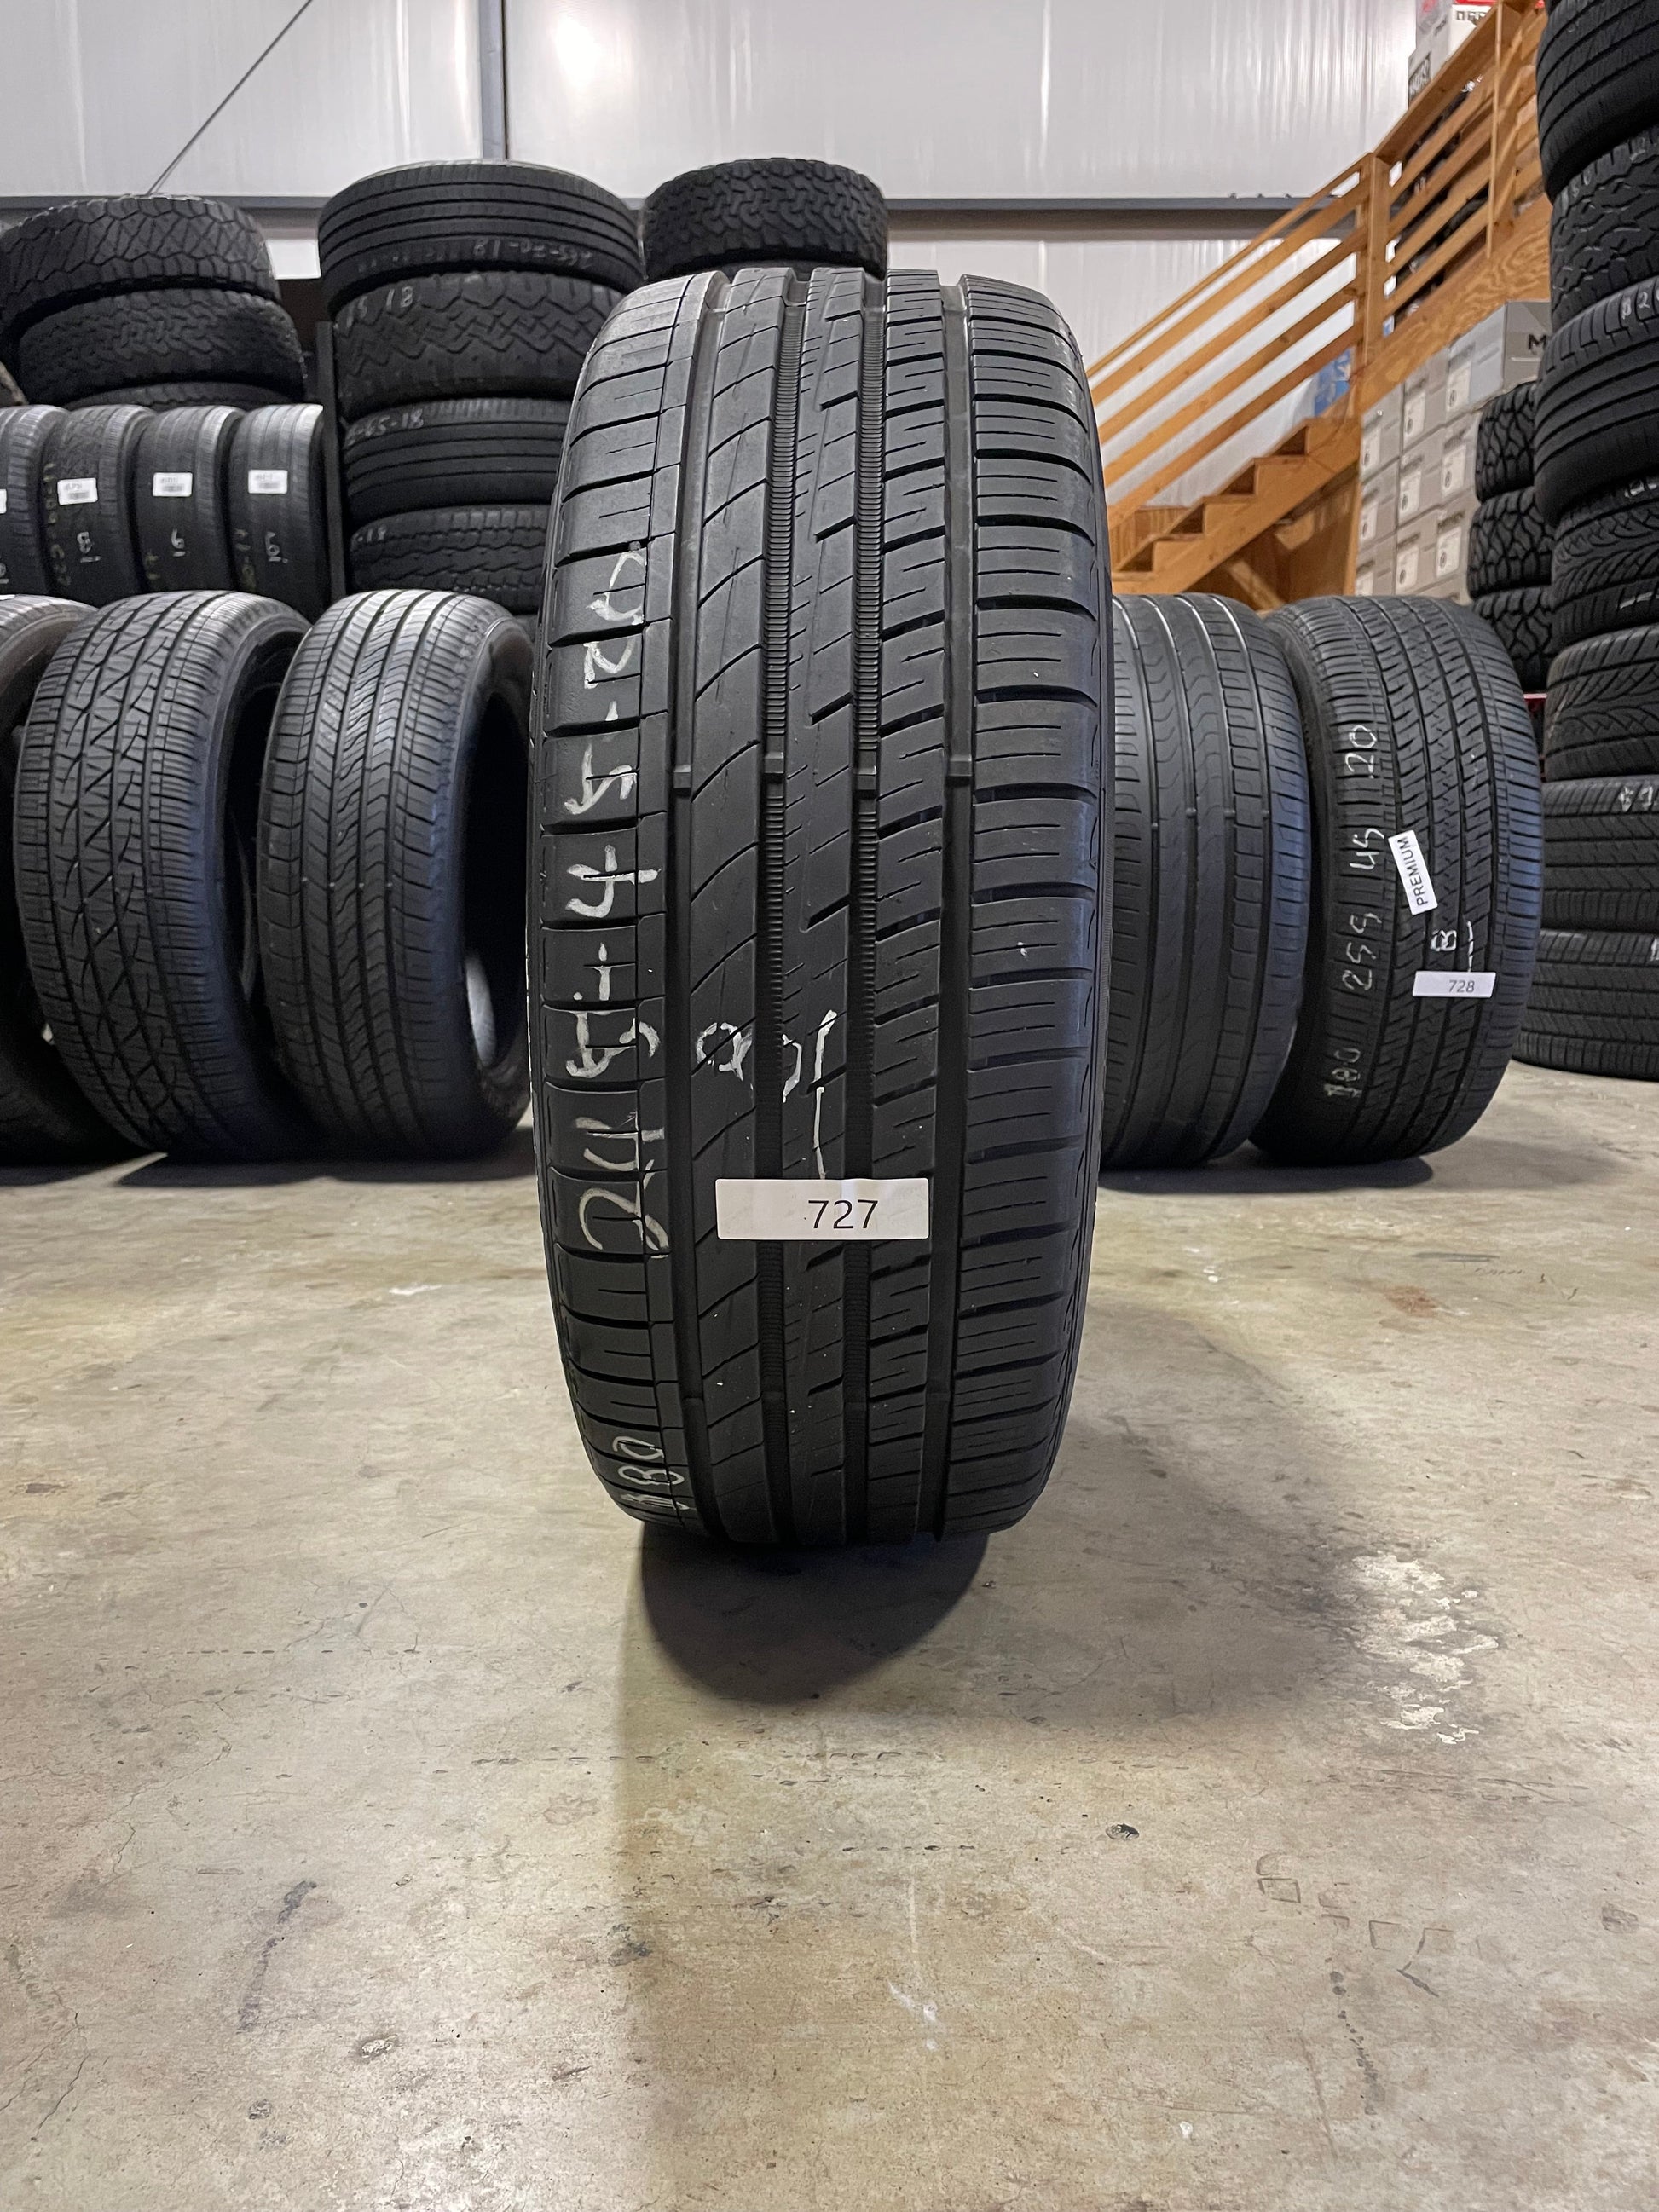 SINGLE 245/45R20 Nexen Nfera RU7 103 W XL - Premium Used Tires